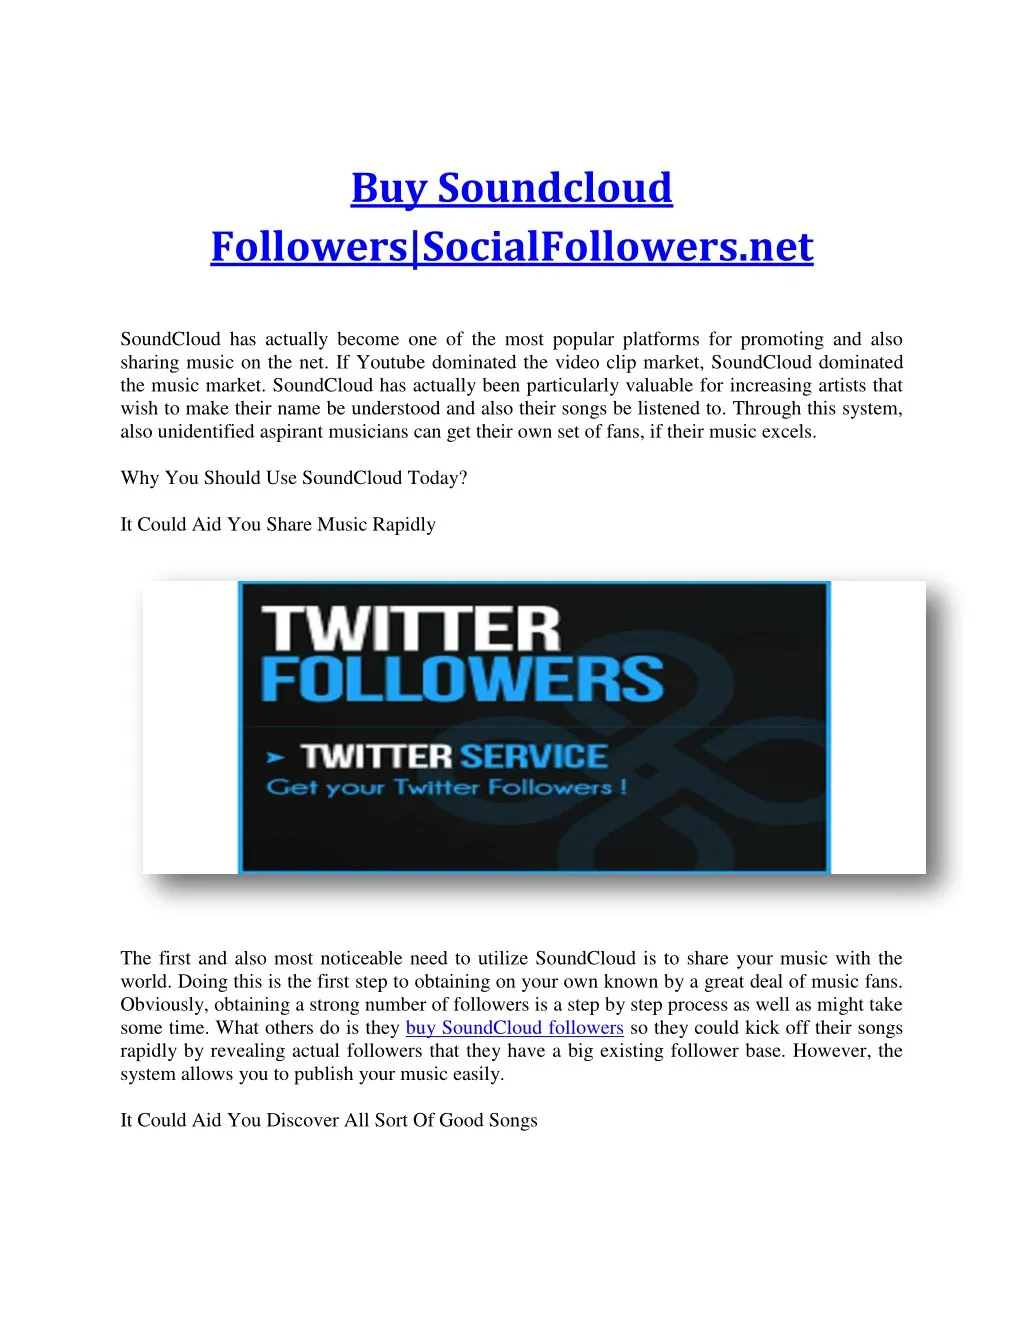 buy soundcloud followers socialfollowers net